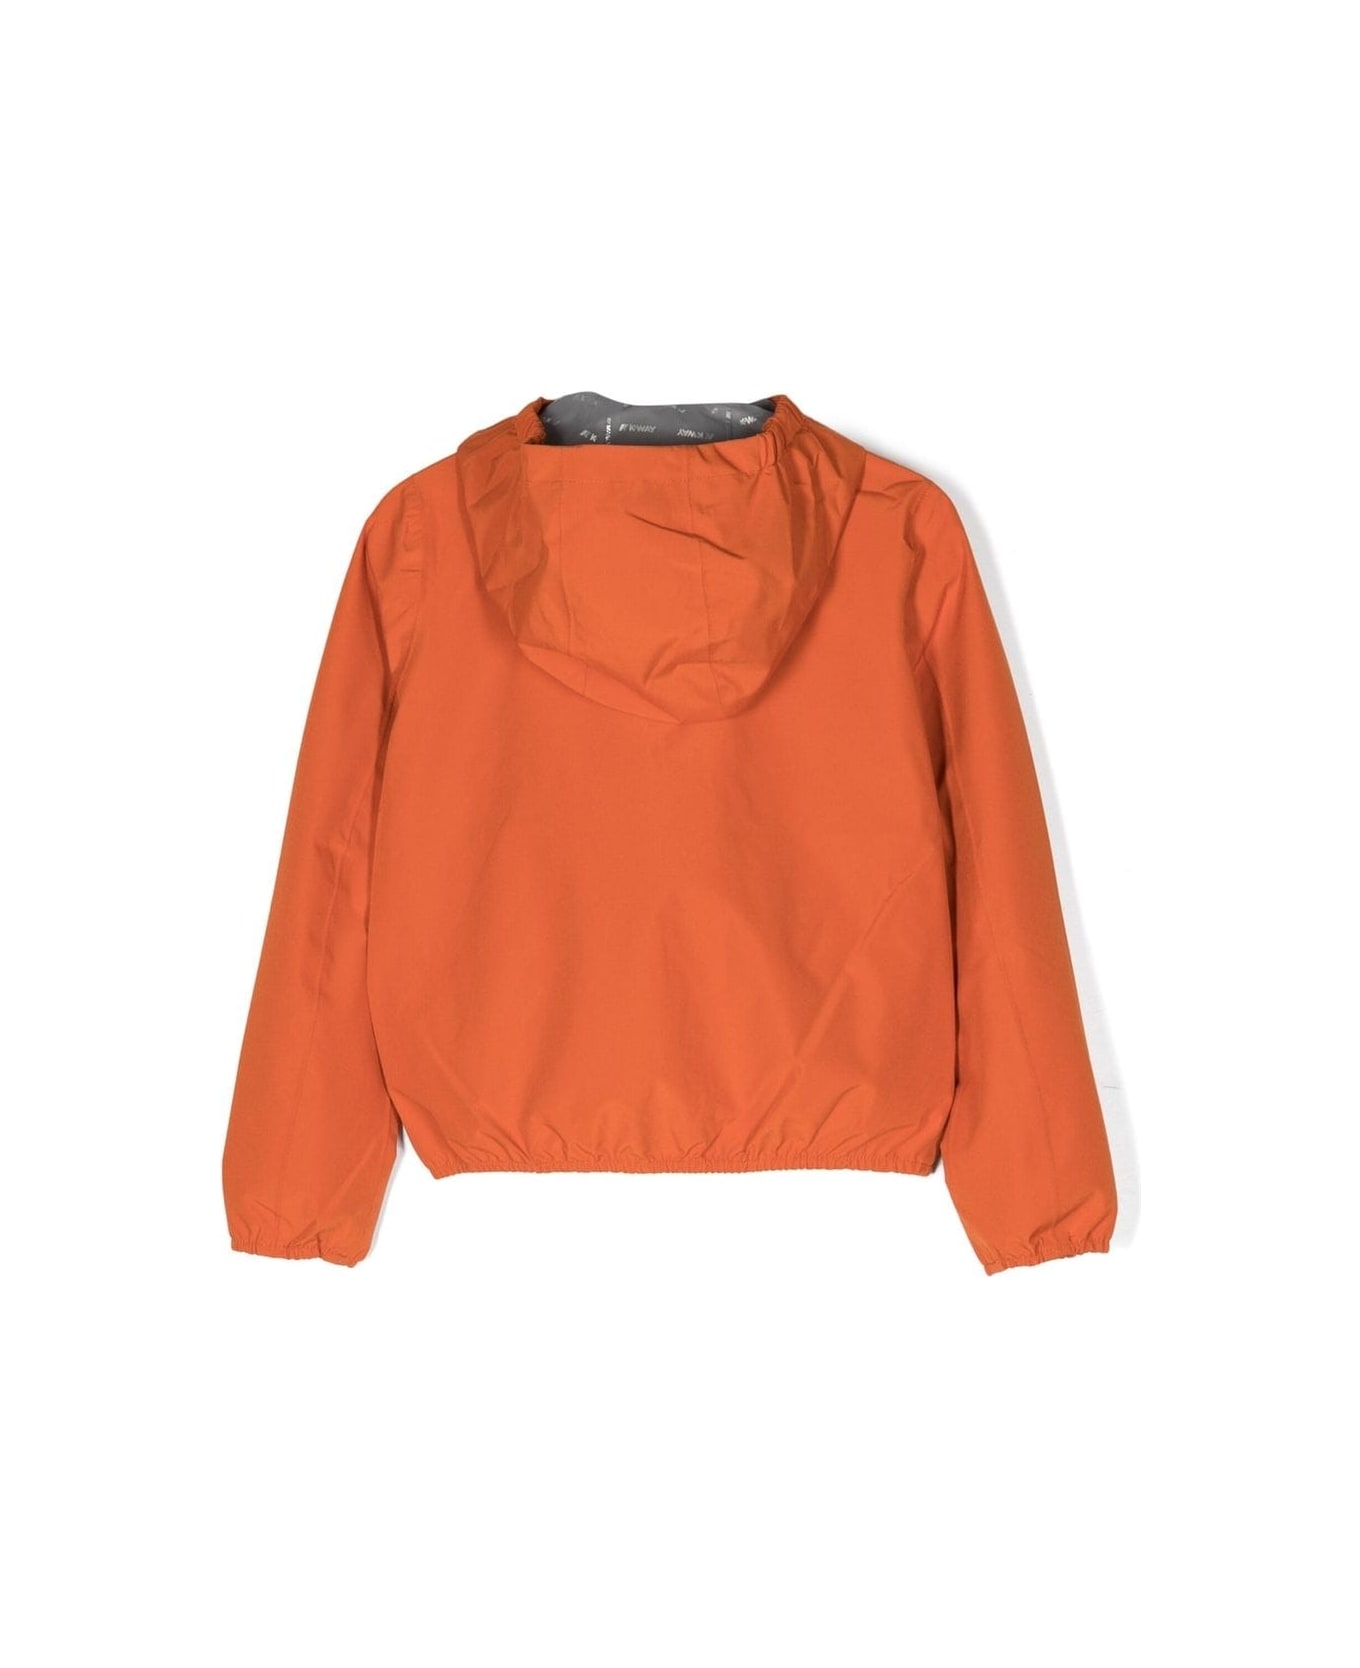 K-Way Jacket With Hood - Orange